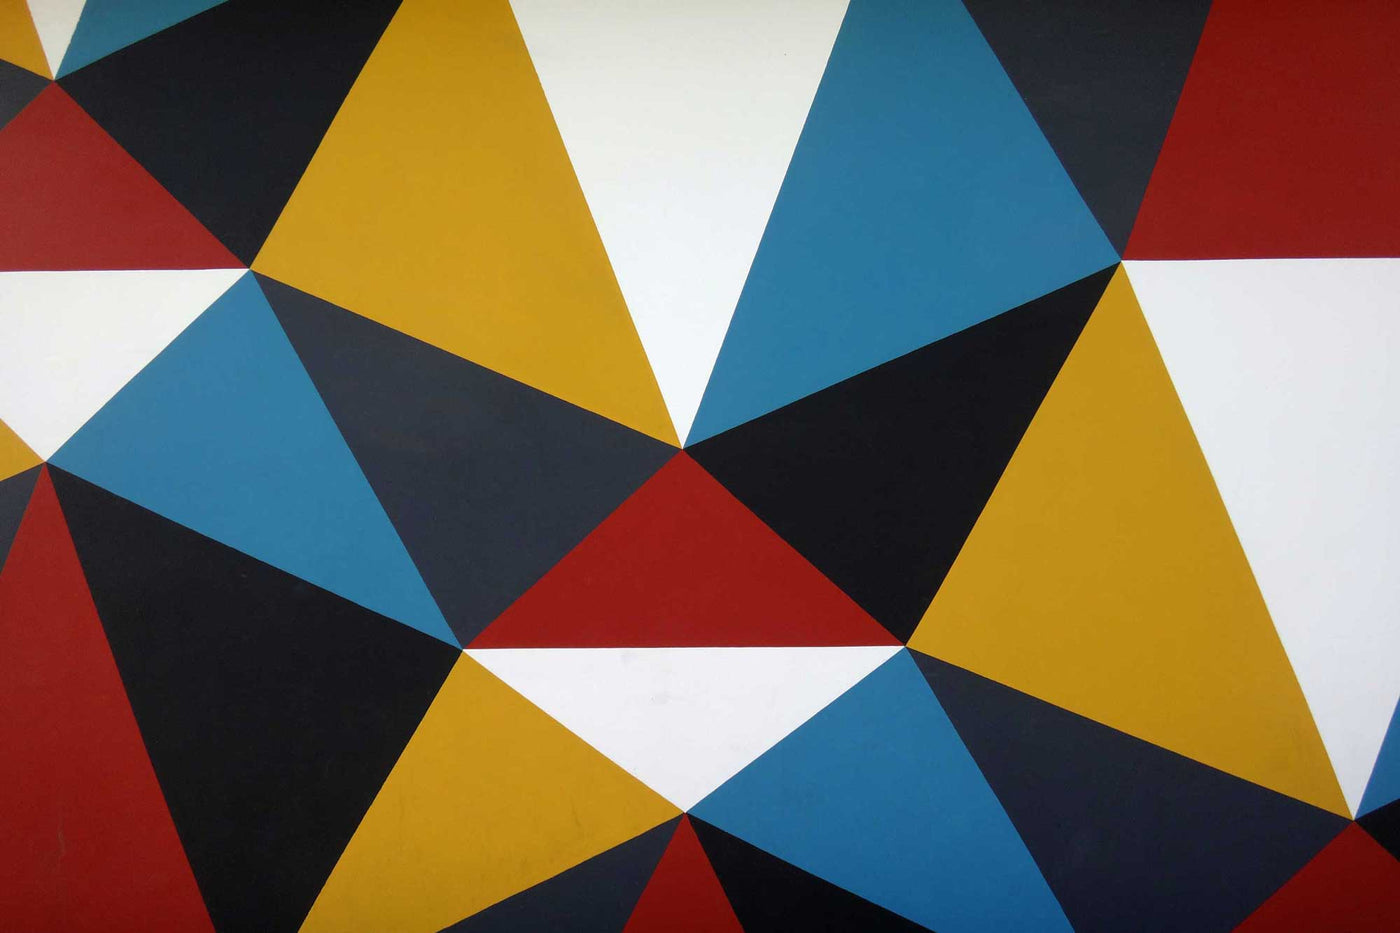 Colorful Geometric Triangles Wall Mural-Wall Mural-Eazywallz